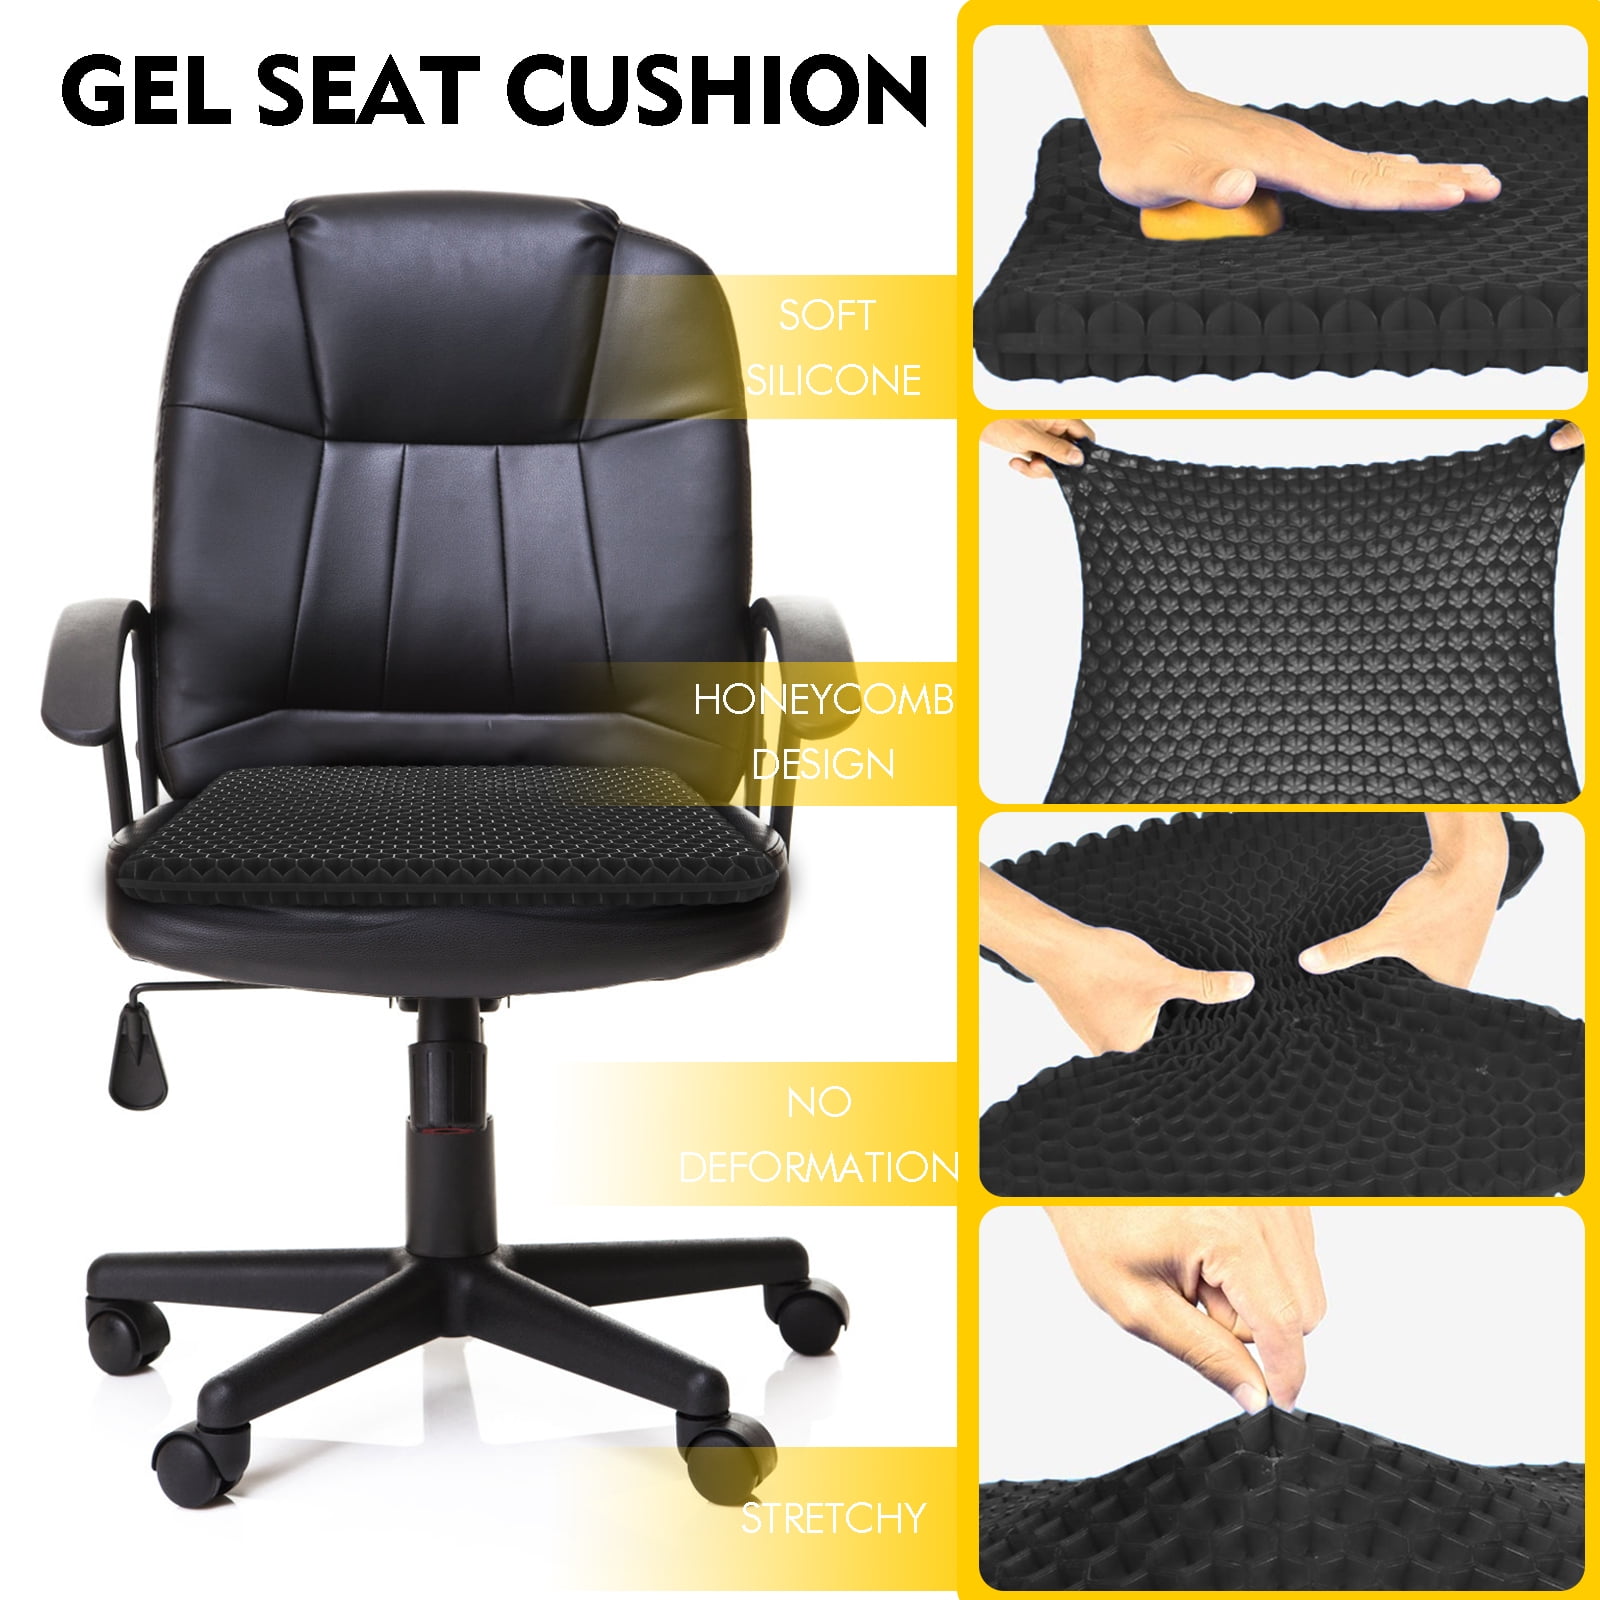 BIMZUC Gel Seat Cushion for Long Sitting Pressure Relief for Back, Coccyx,  Sciatica, Tailbone Pain – Car and Truck Seat Cushion, Wheelchair Cushions